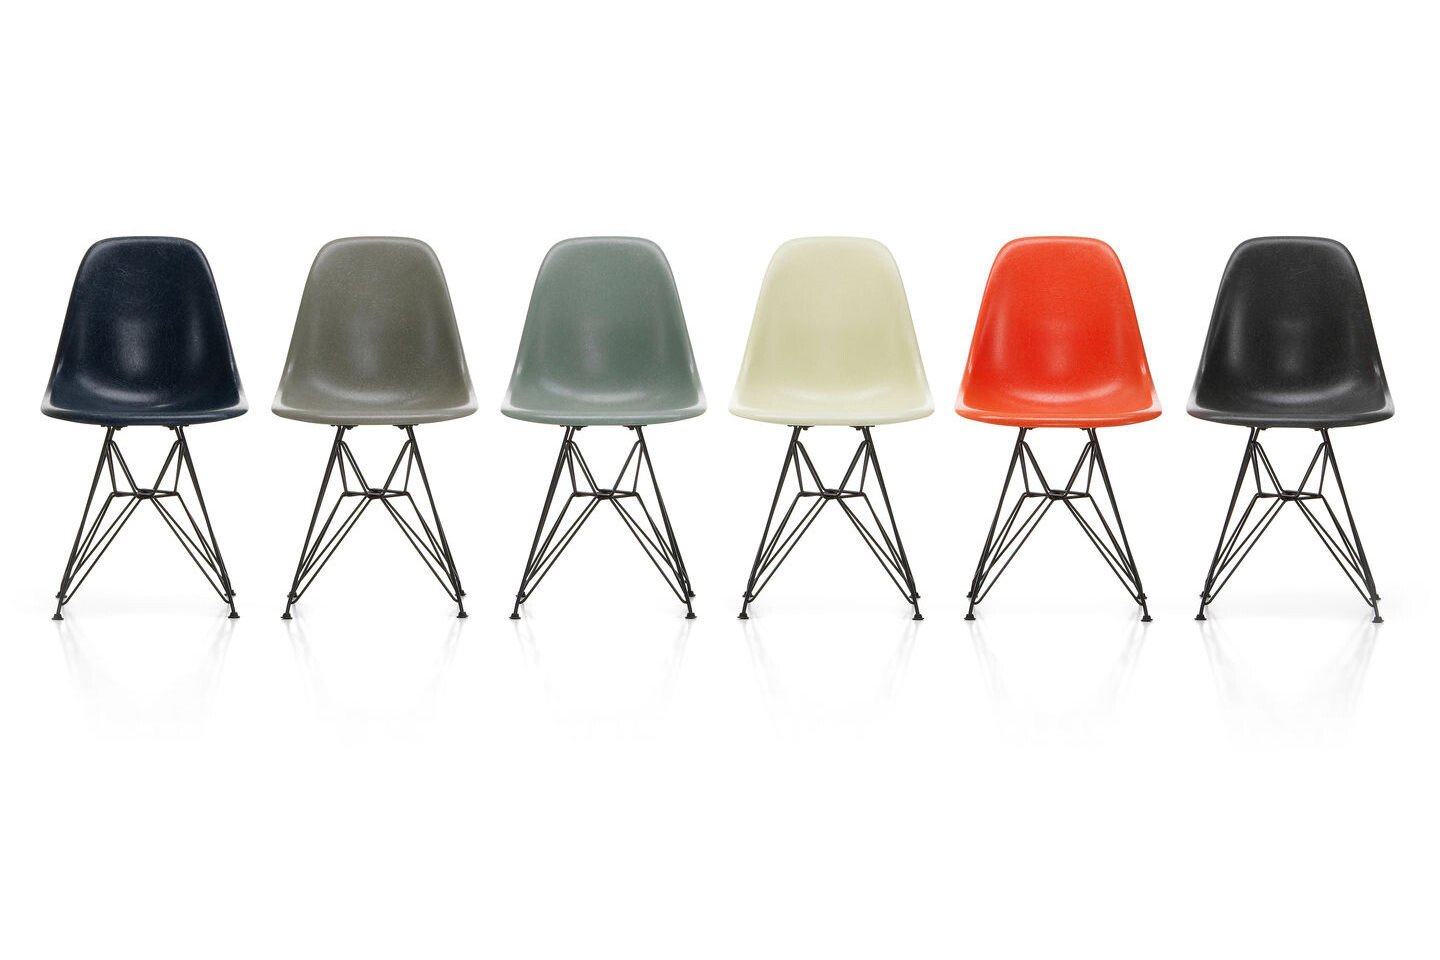 thermometer verzending veld Vitra Eames Fiberglass Chairs (B2B) - De Projectinrichter